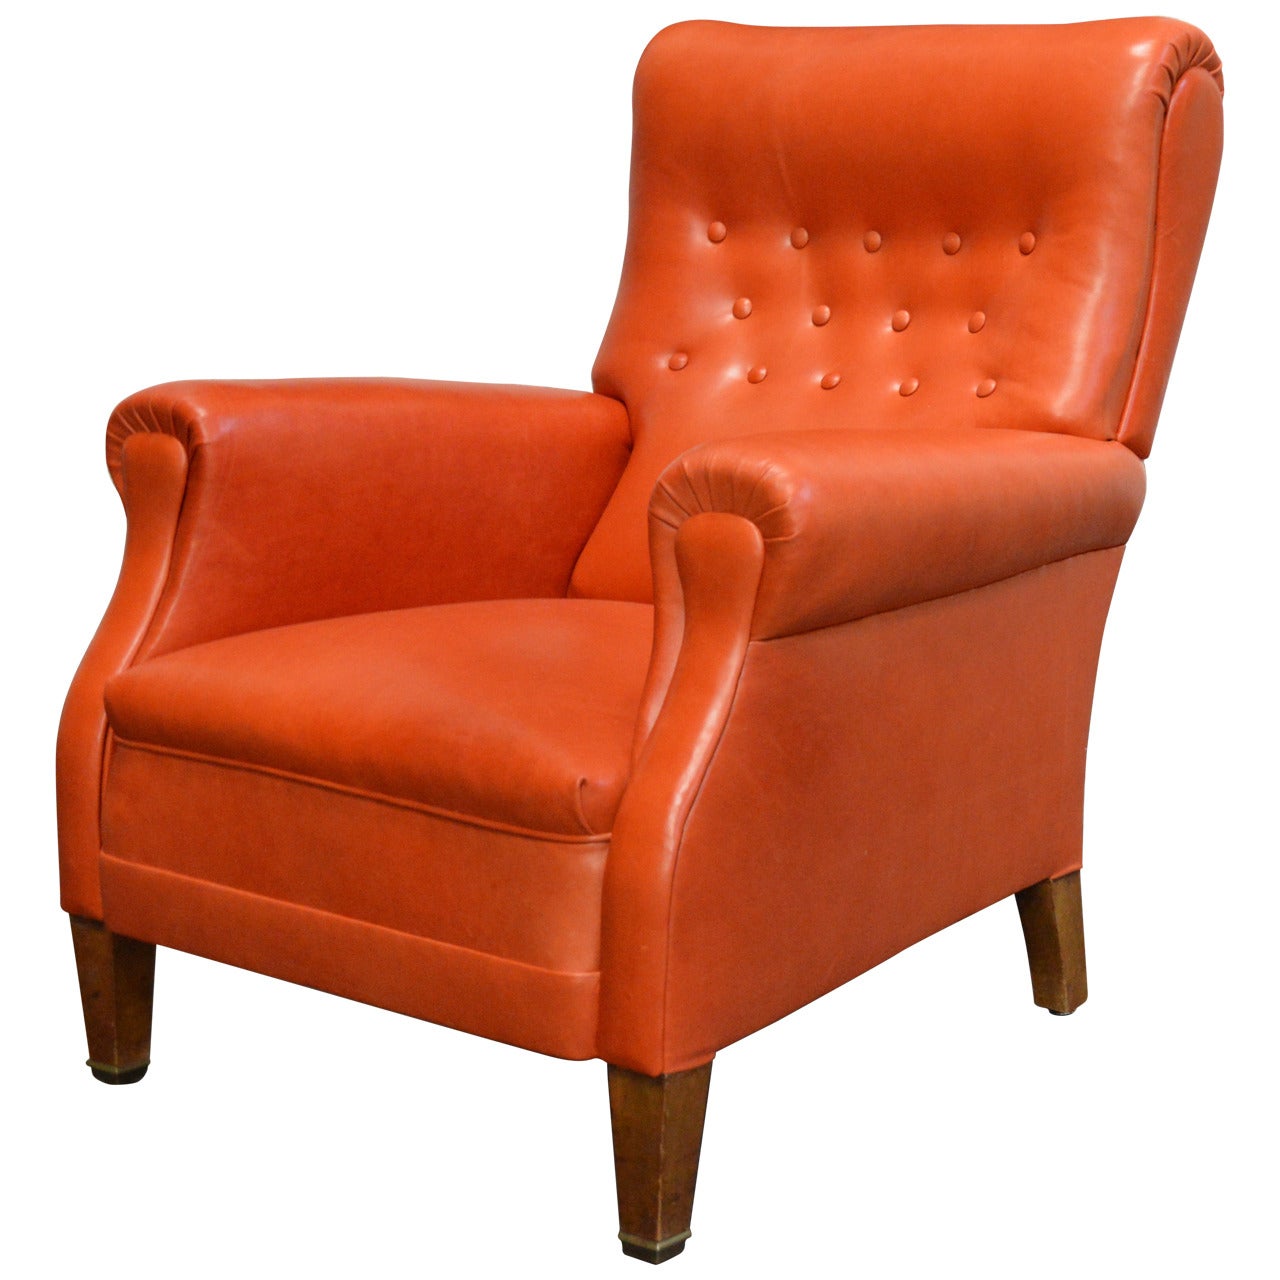 Vintage Swedish Orange Leather Lounge Chair